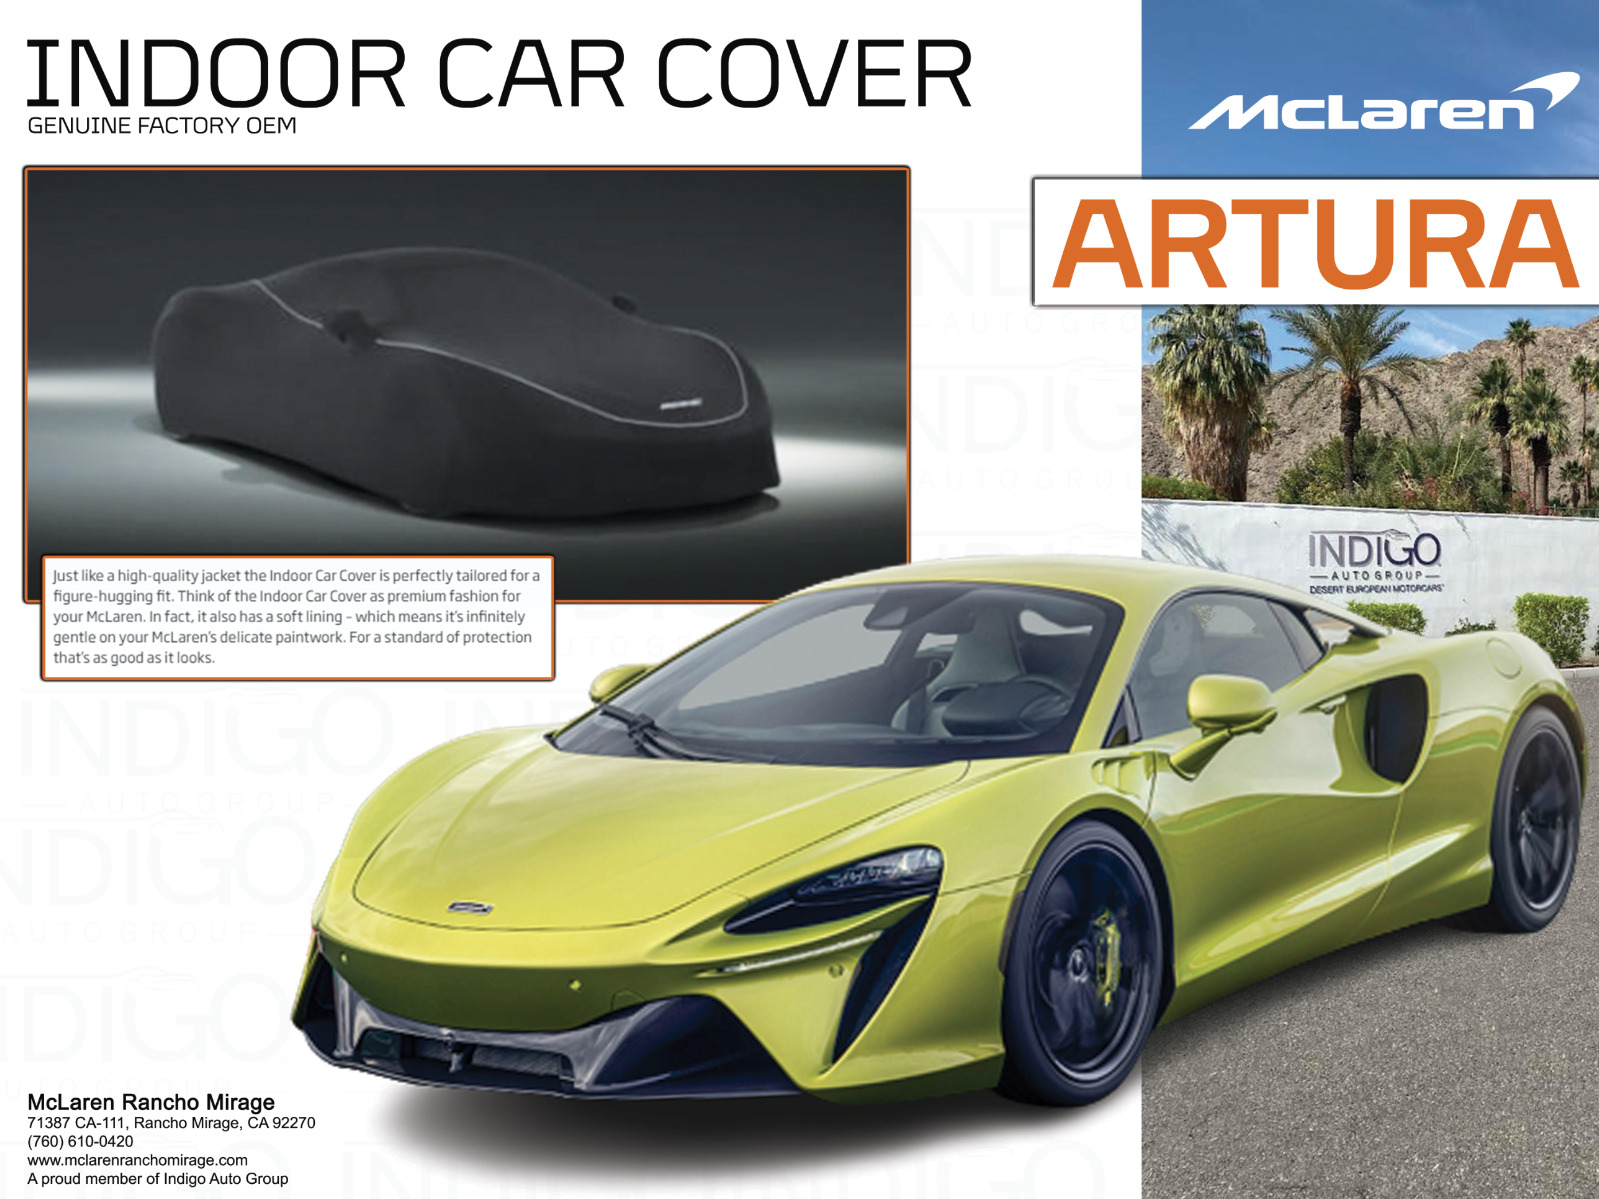 McLaren ARTURA Factory OEM Indoor Car Cover With Bag - 16NA099CP